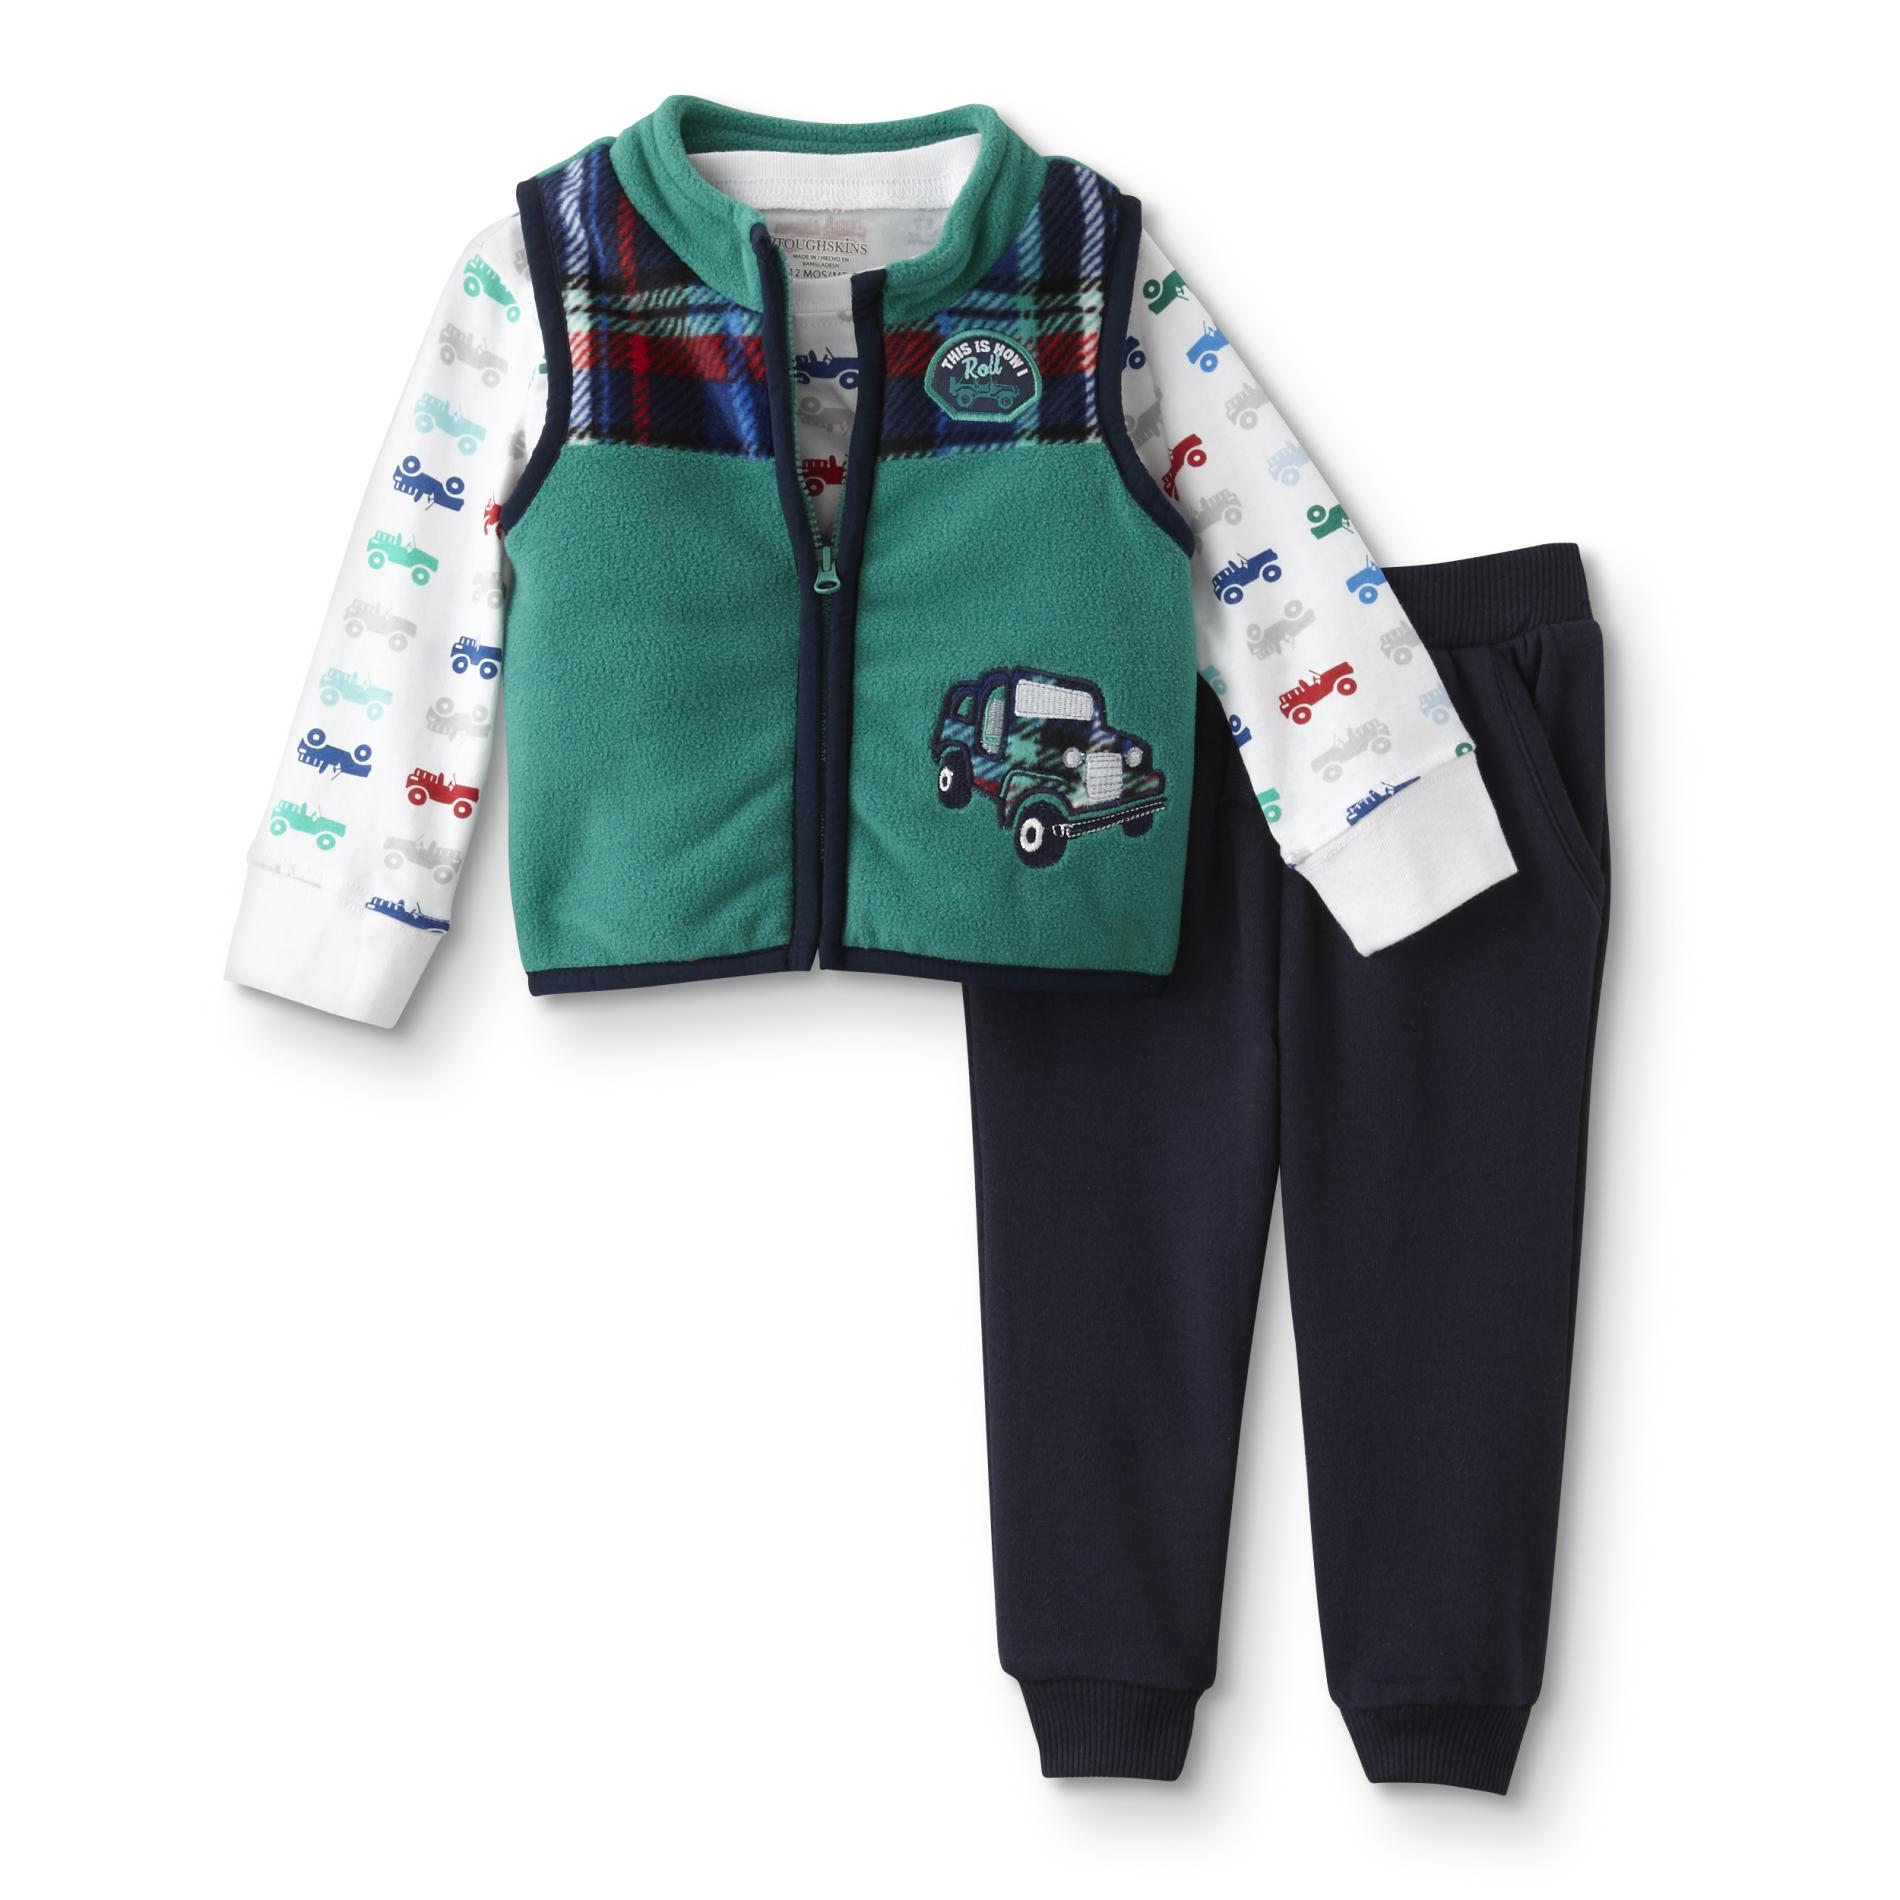 Toughskins Infant & Toddler Boys' Long-Sleeve Shirt, Vest & Joggers - Trucks